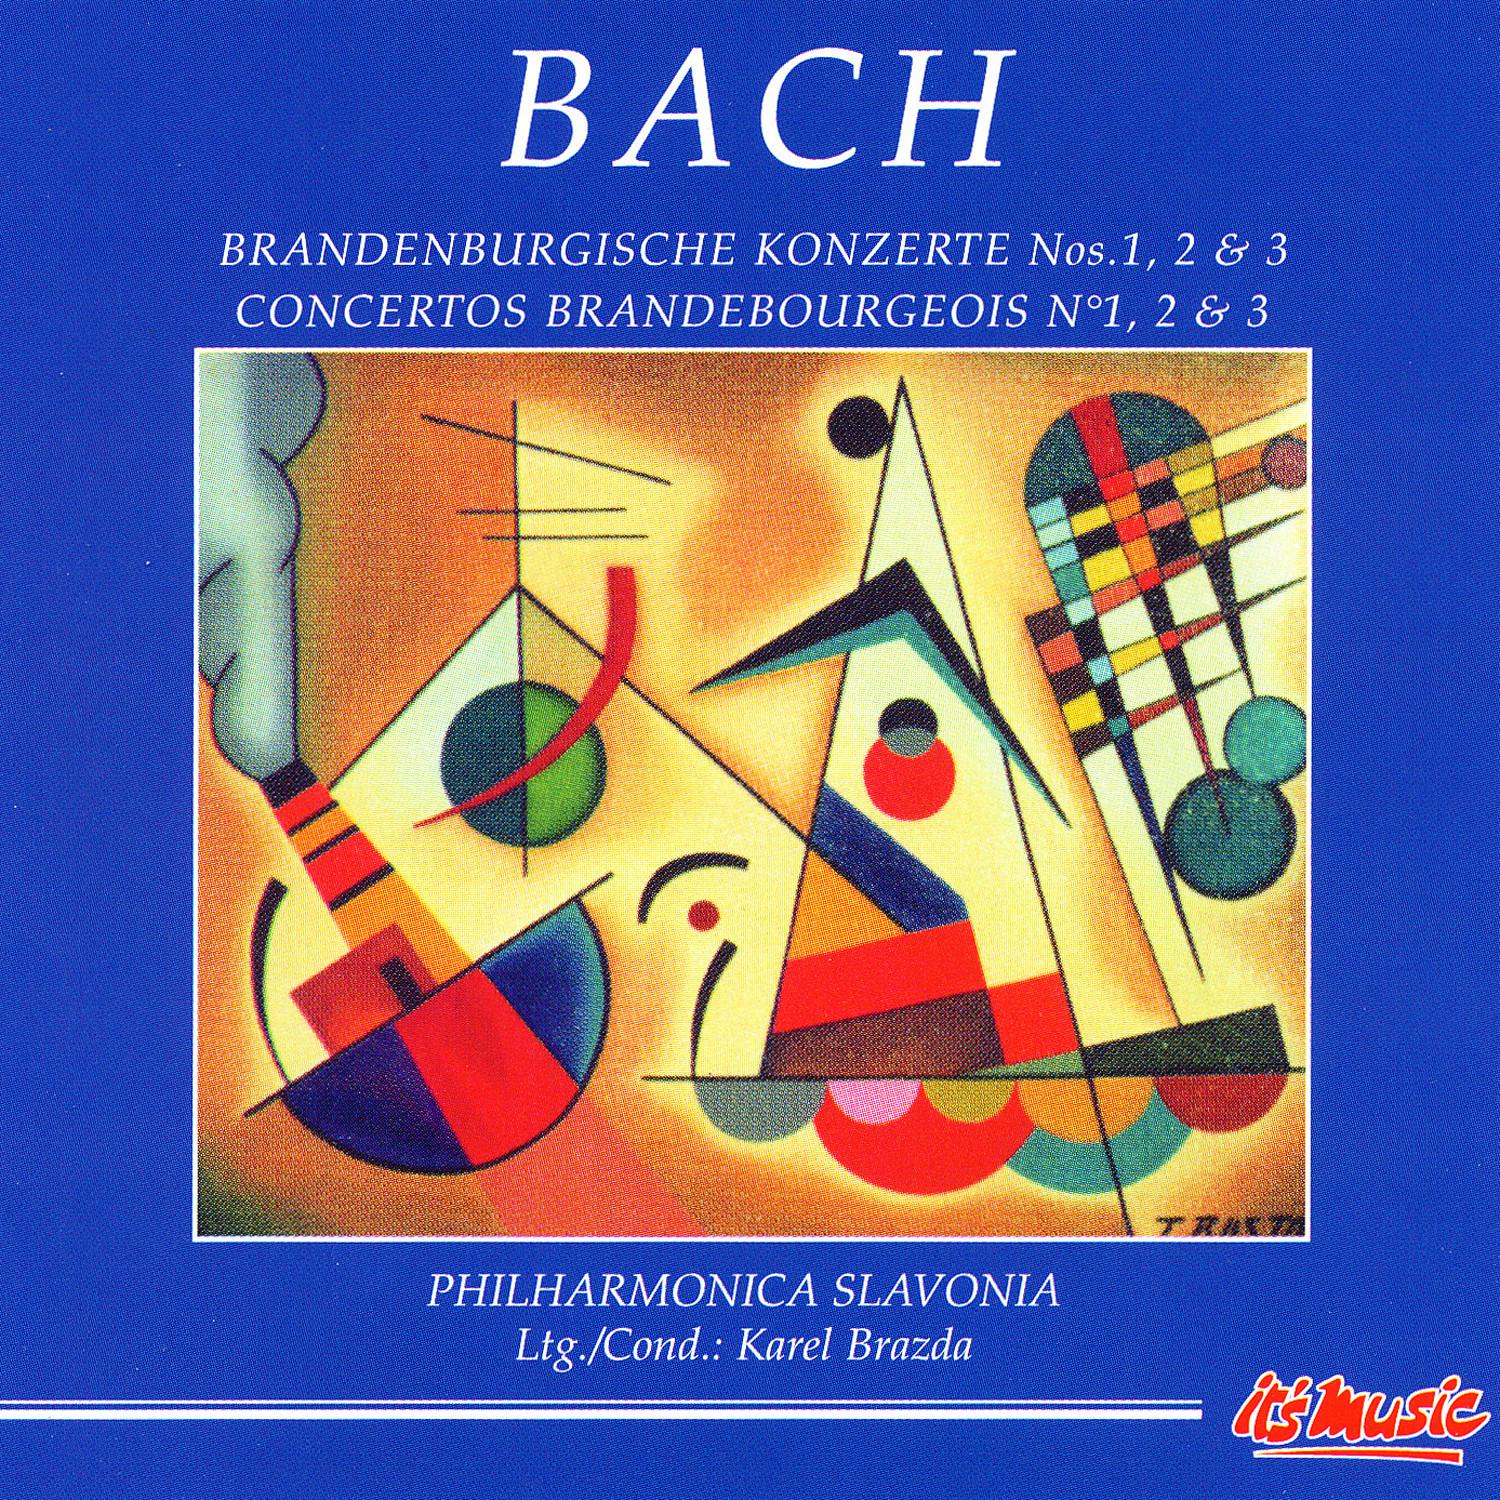 Brandenburg Concerto No. 3 in G major III. Allegro